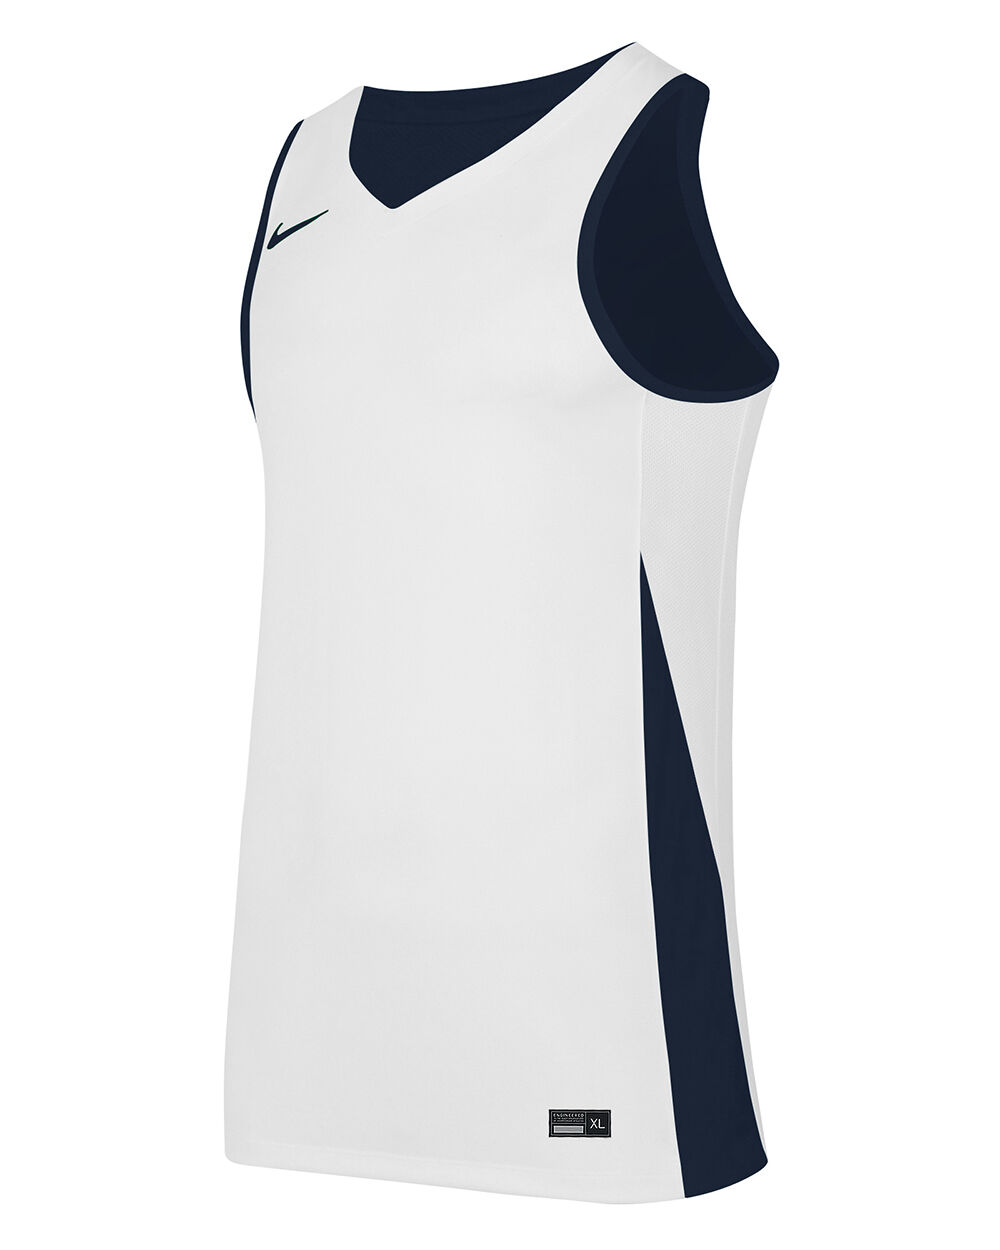 Camiseta de baloncesto reversible Nike Team Azul Marino y Blanco Niño - NT0204-451